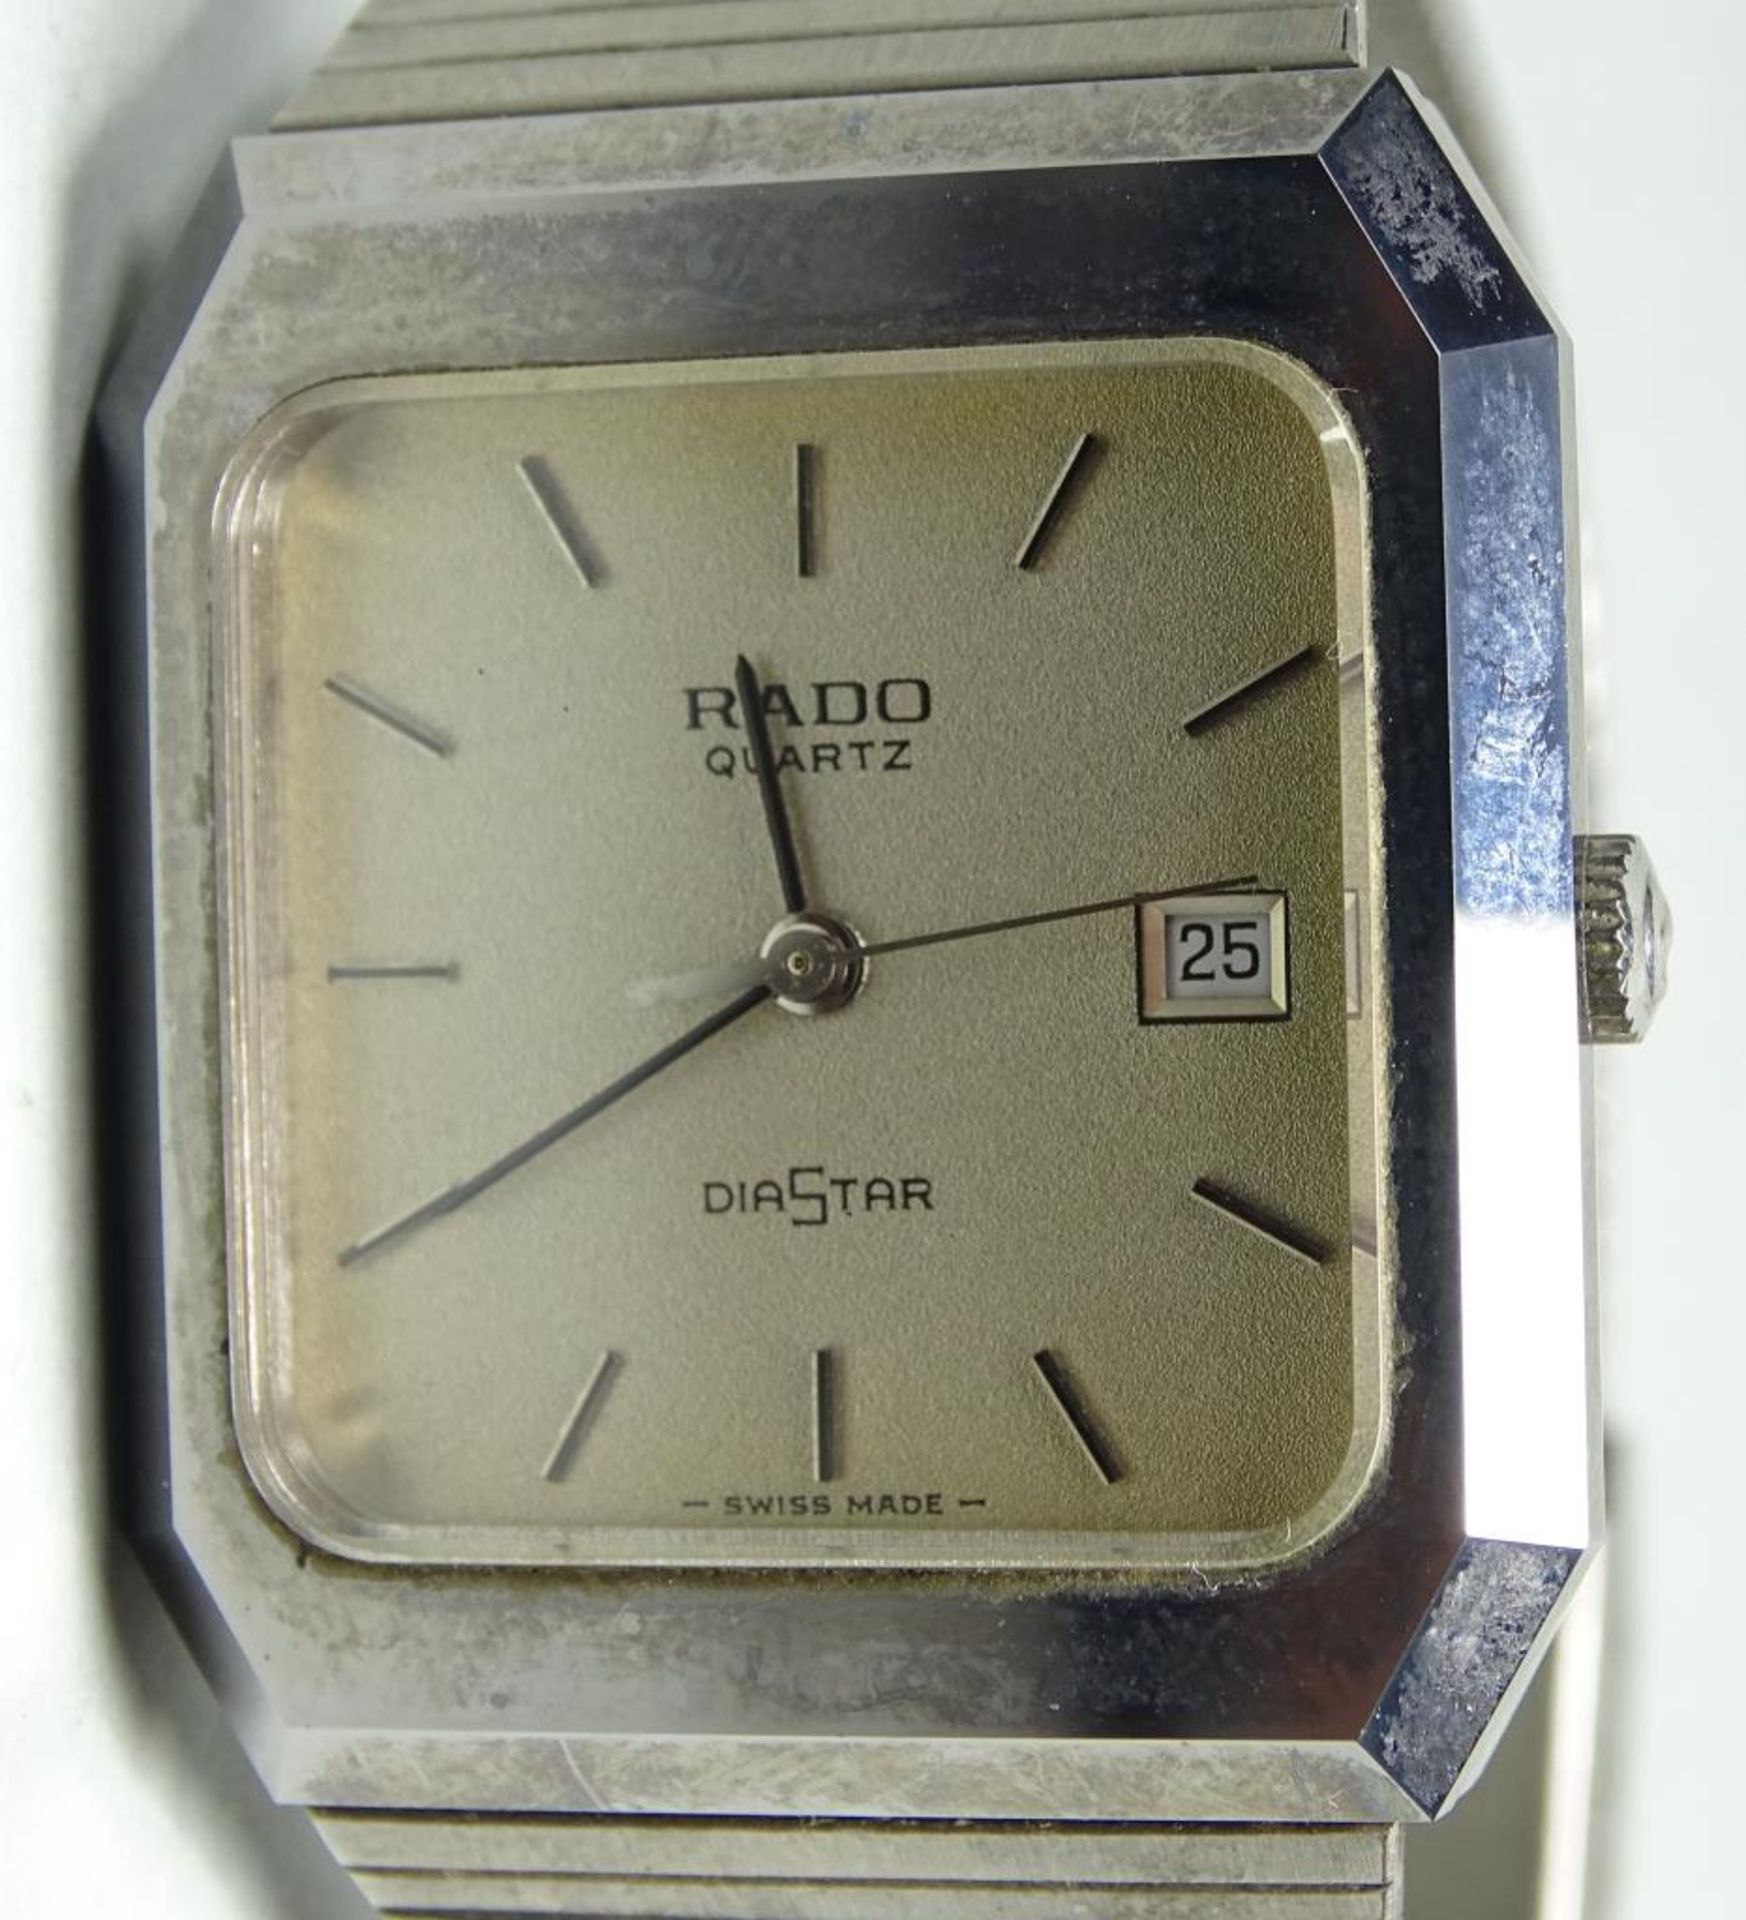 Armbanduhr "Rado-Diastar",Quartz,Saphirglas,Edelstahl,Gehäuse 31x29mm,Funktion nicht geteste - Bild 3 aus 6